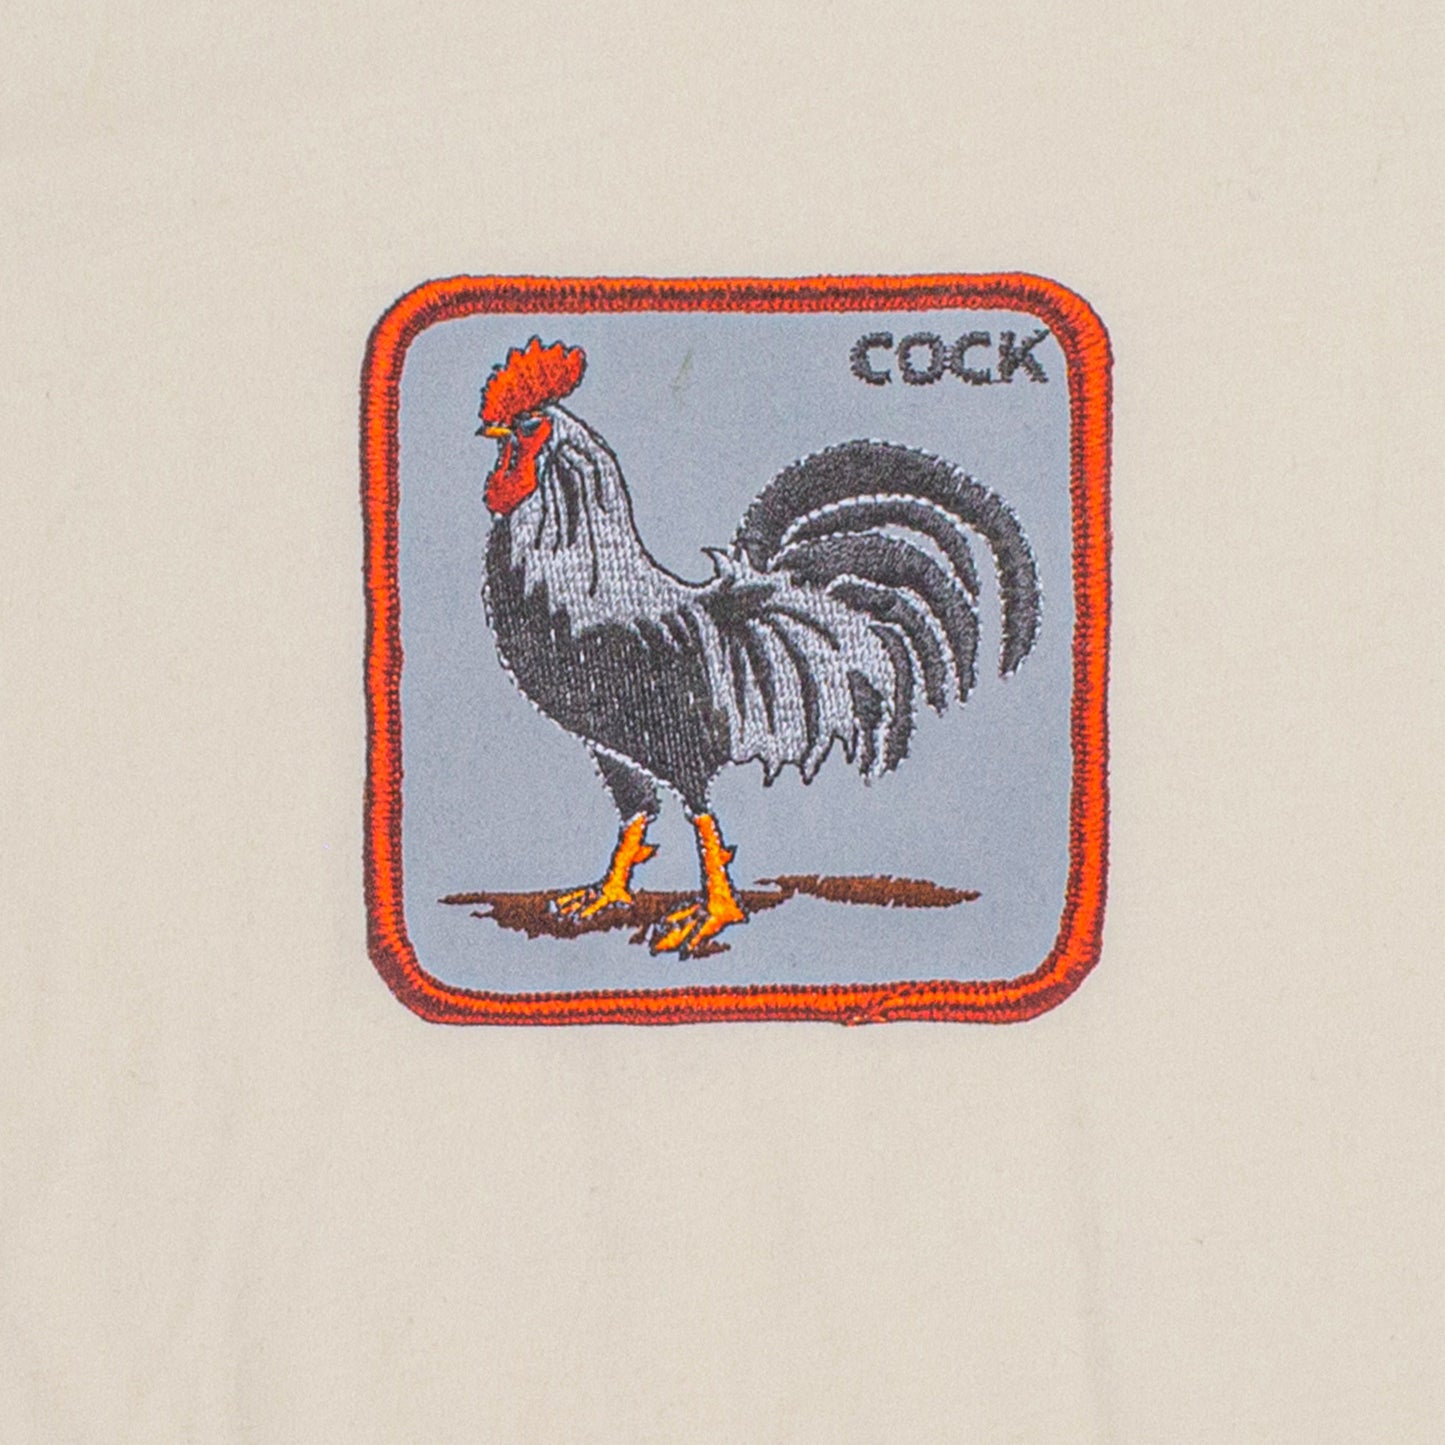 Goorin Bros "Clucker" T-Shirt in Cream color